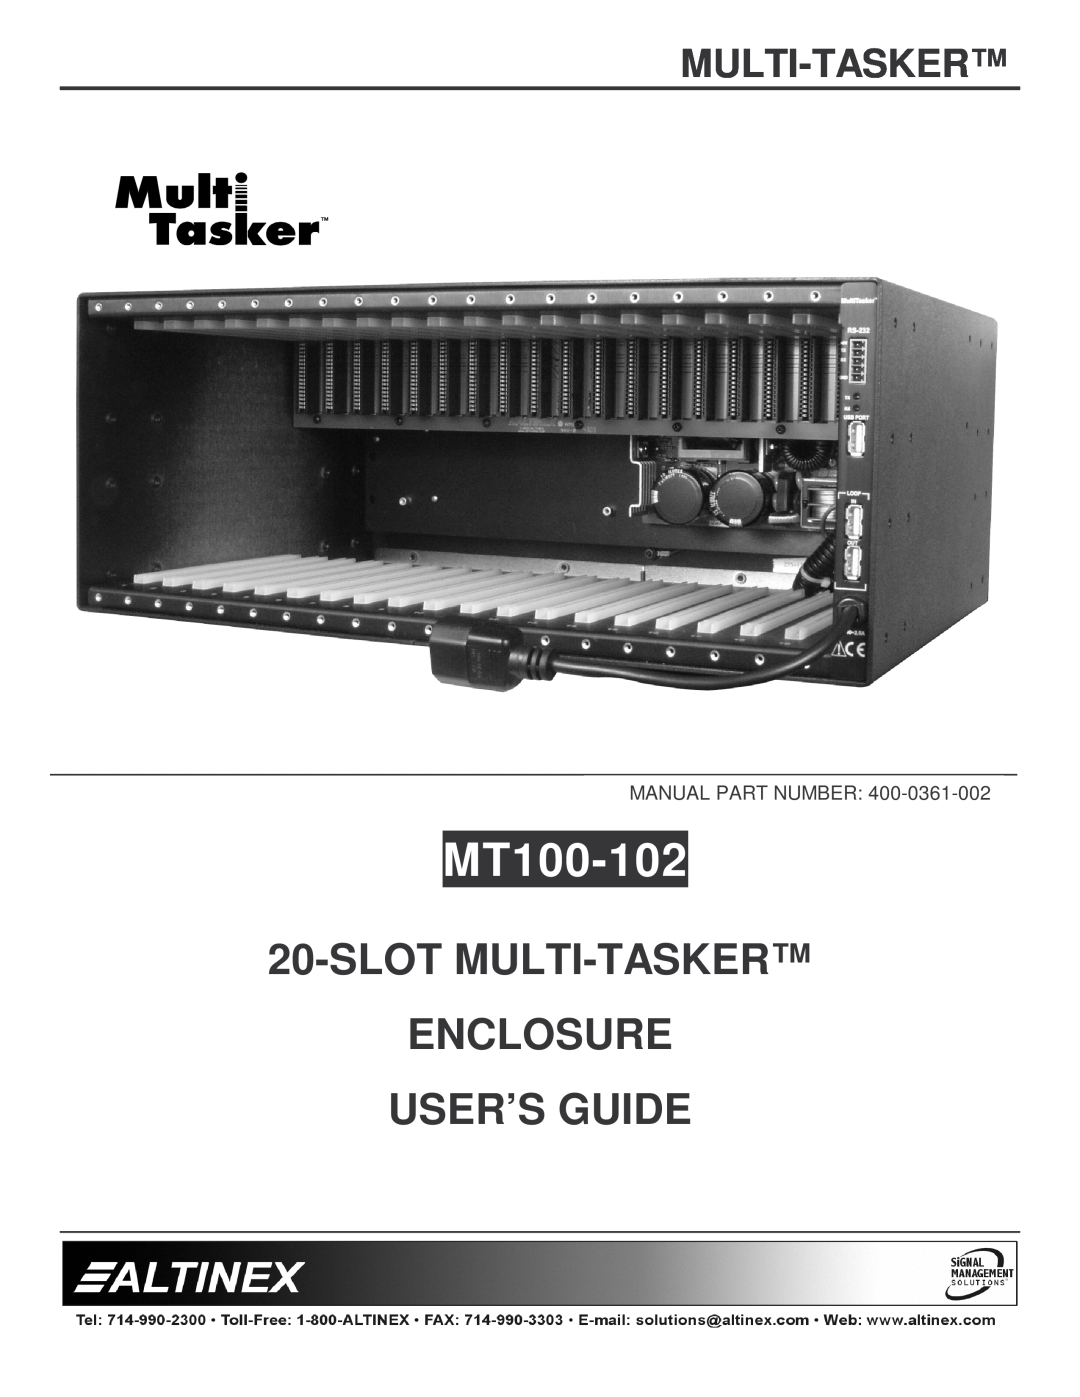 Altinex MT100-102 manual Slot Multi-Tasker Enclosure User’S Guide 